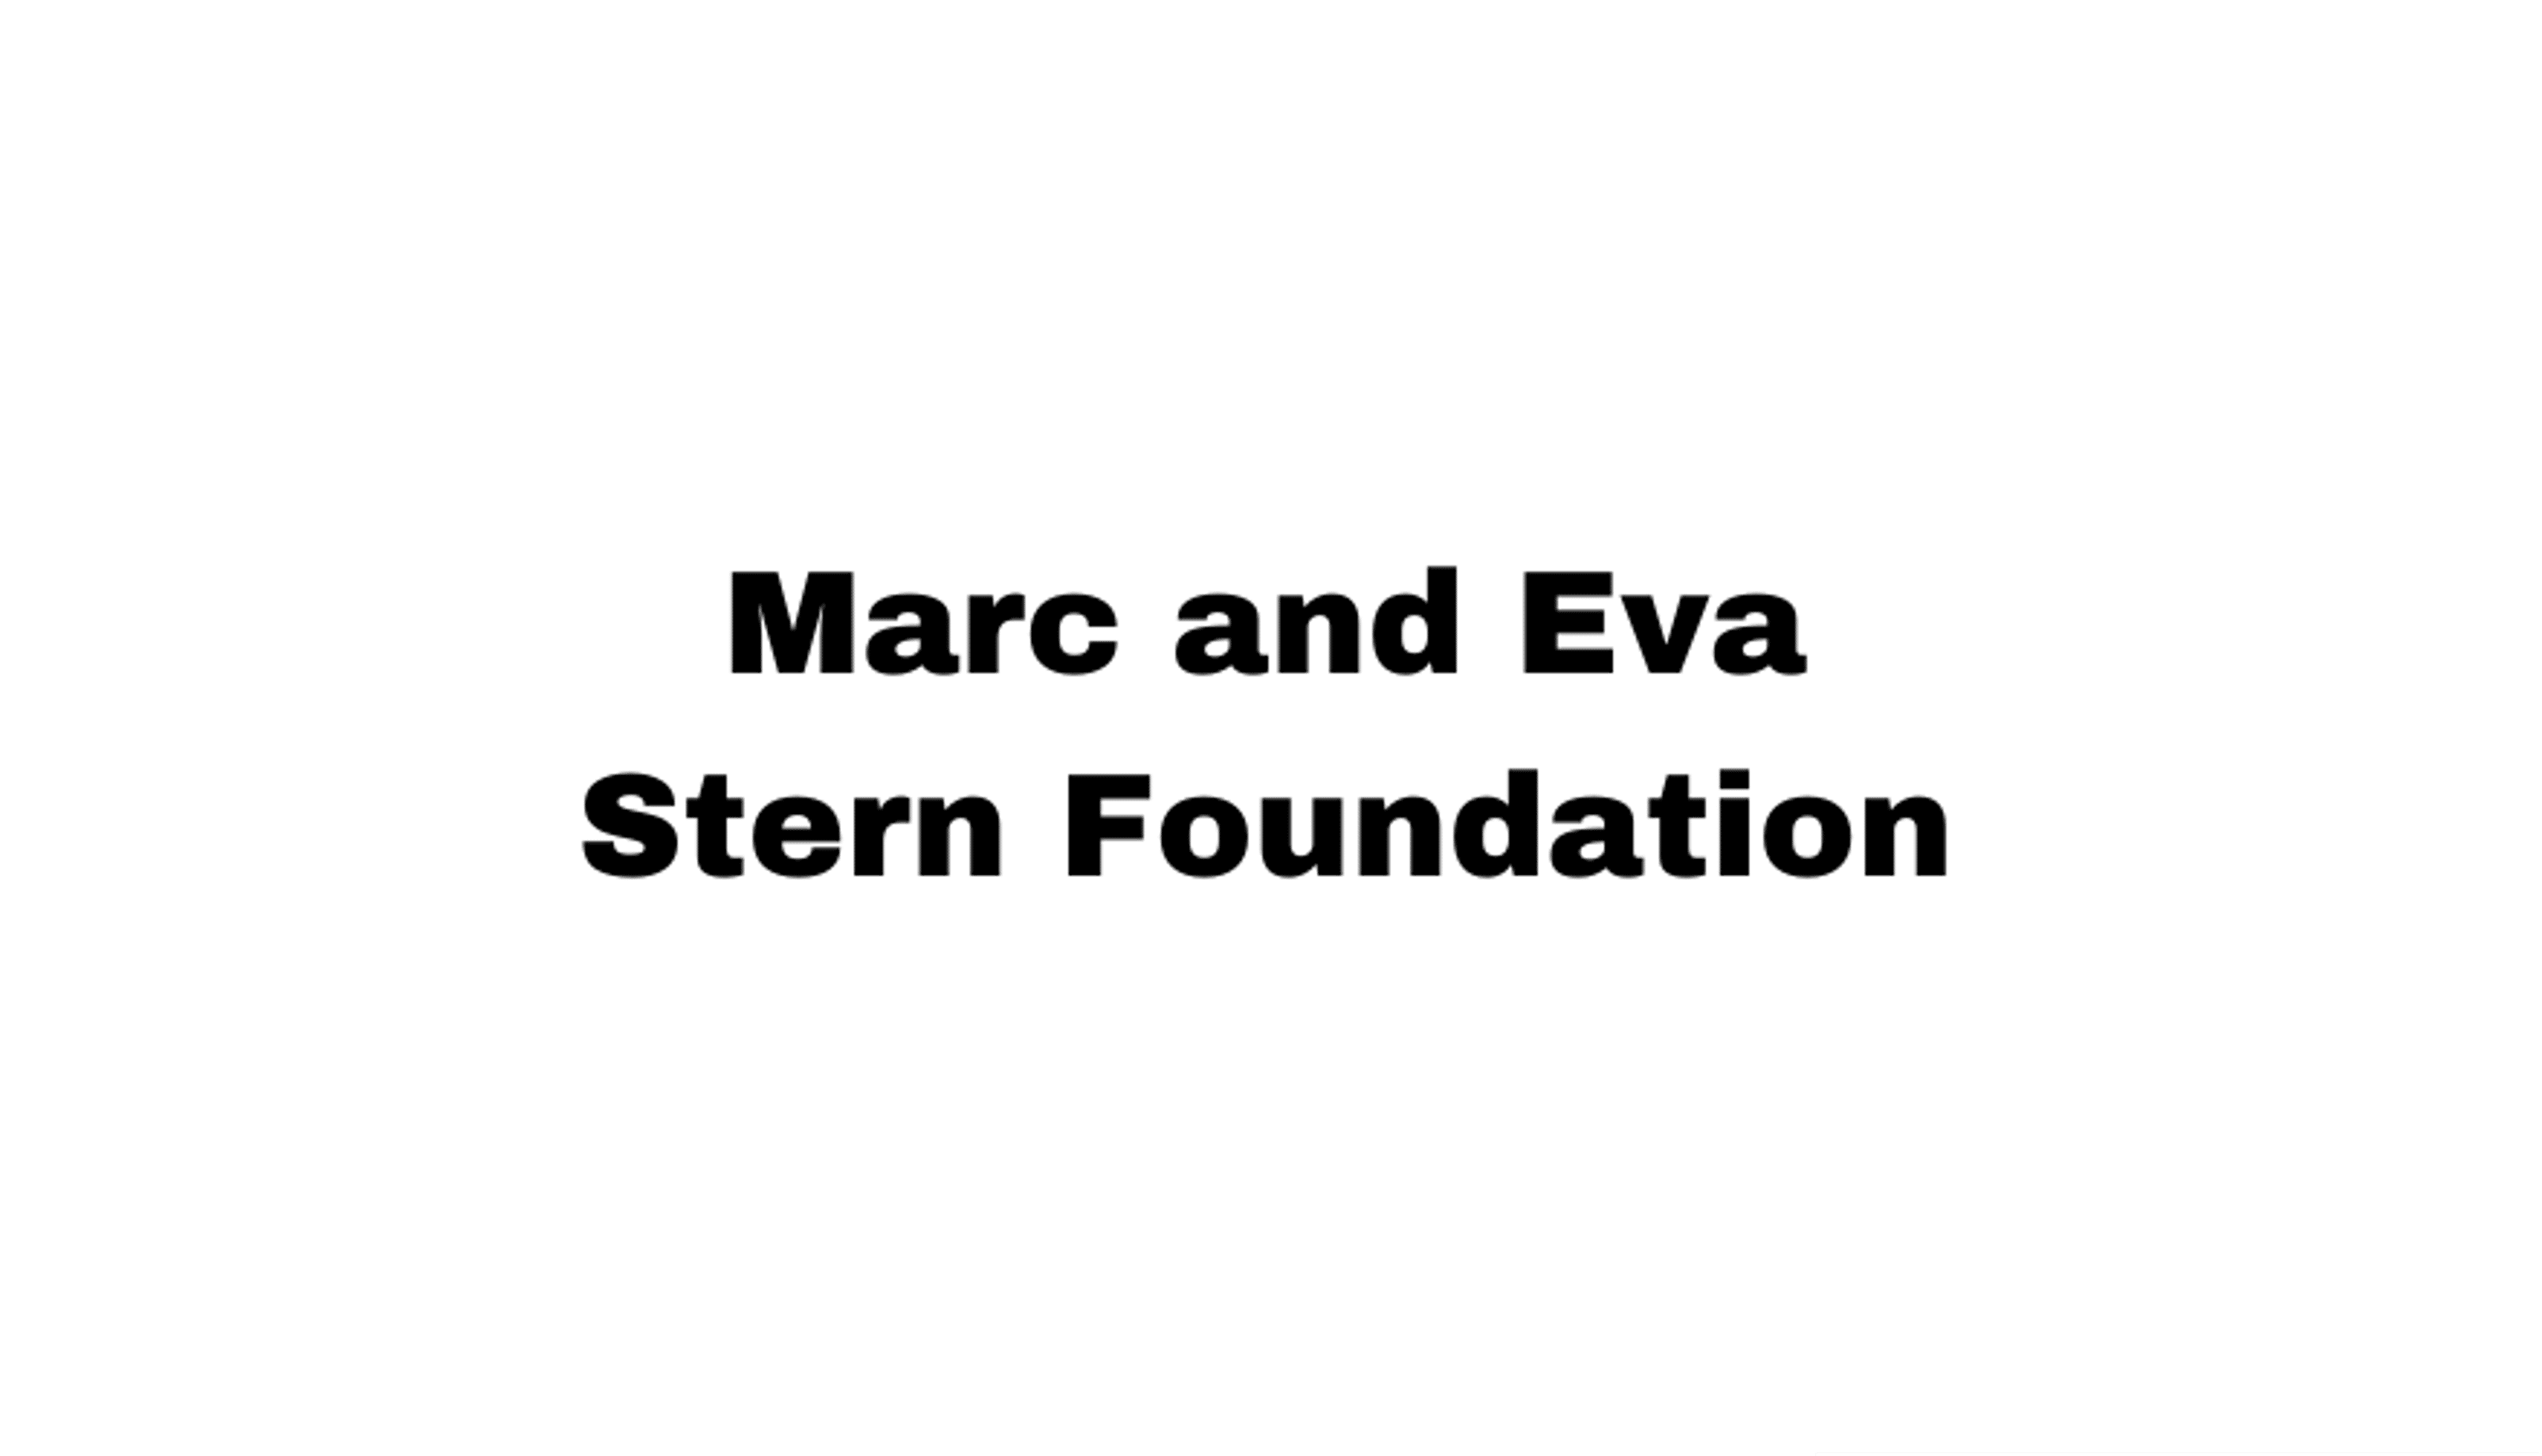 Marc and Eva Stern Foundation